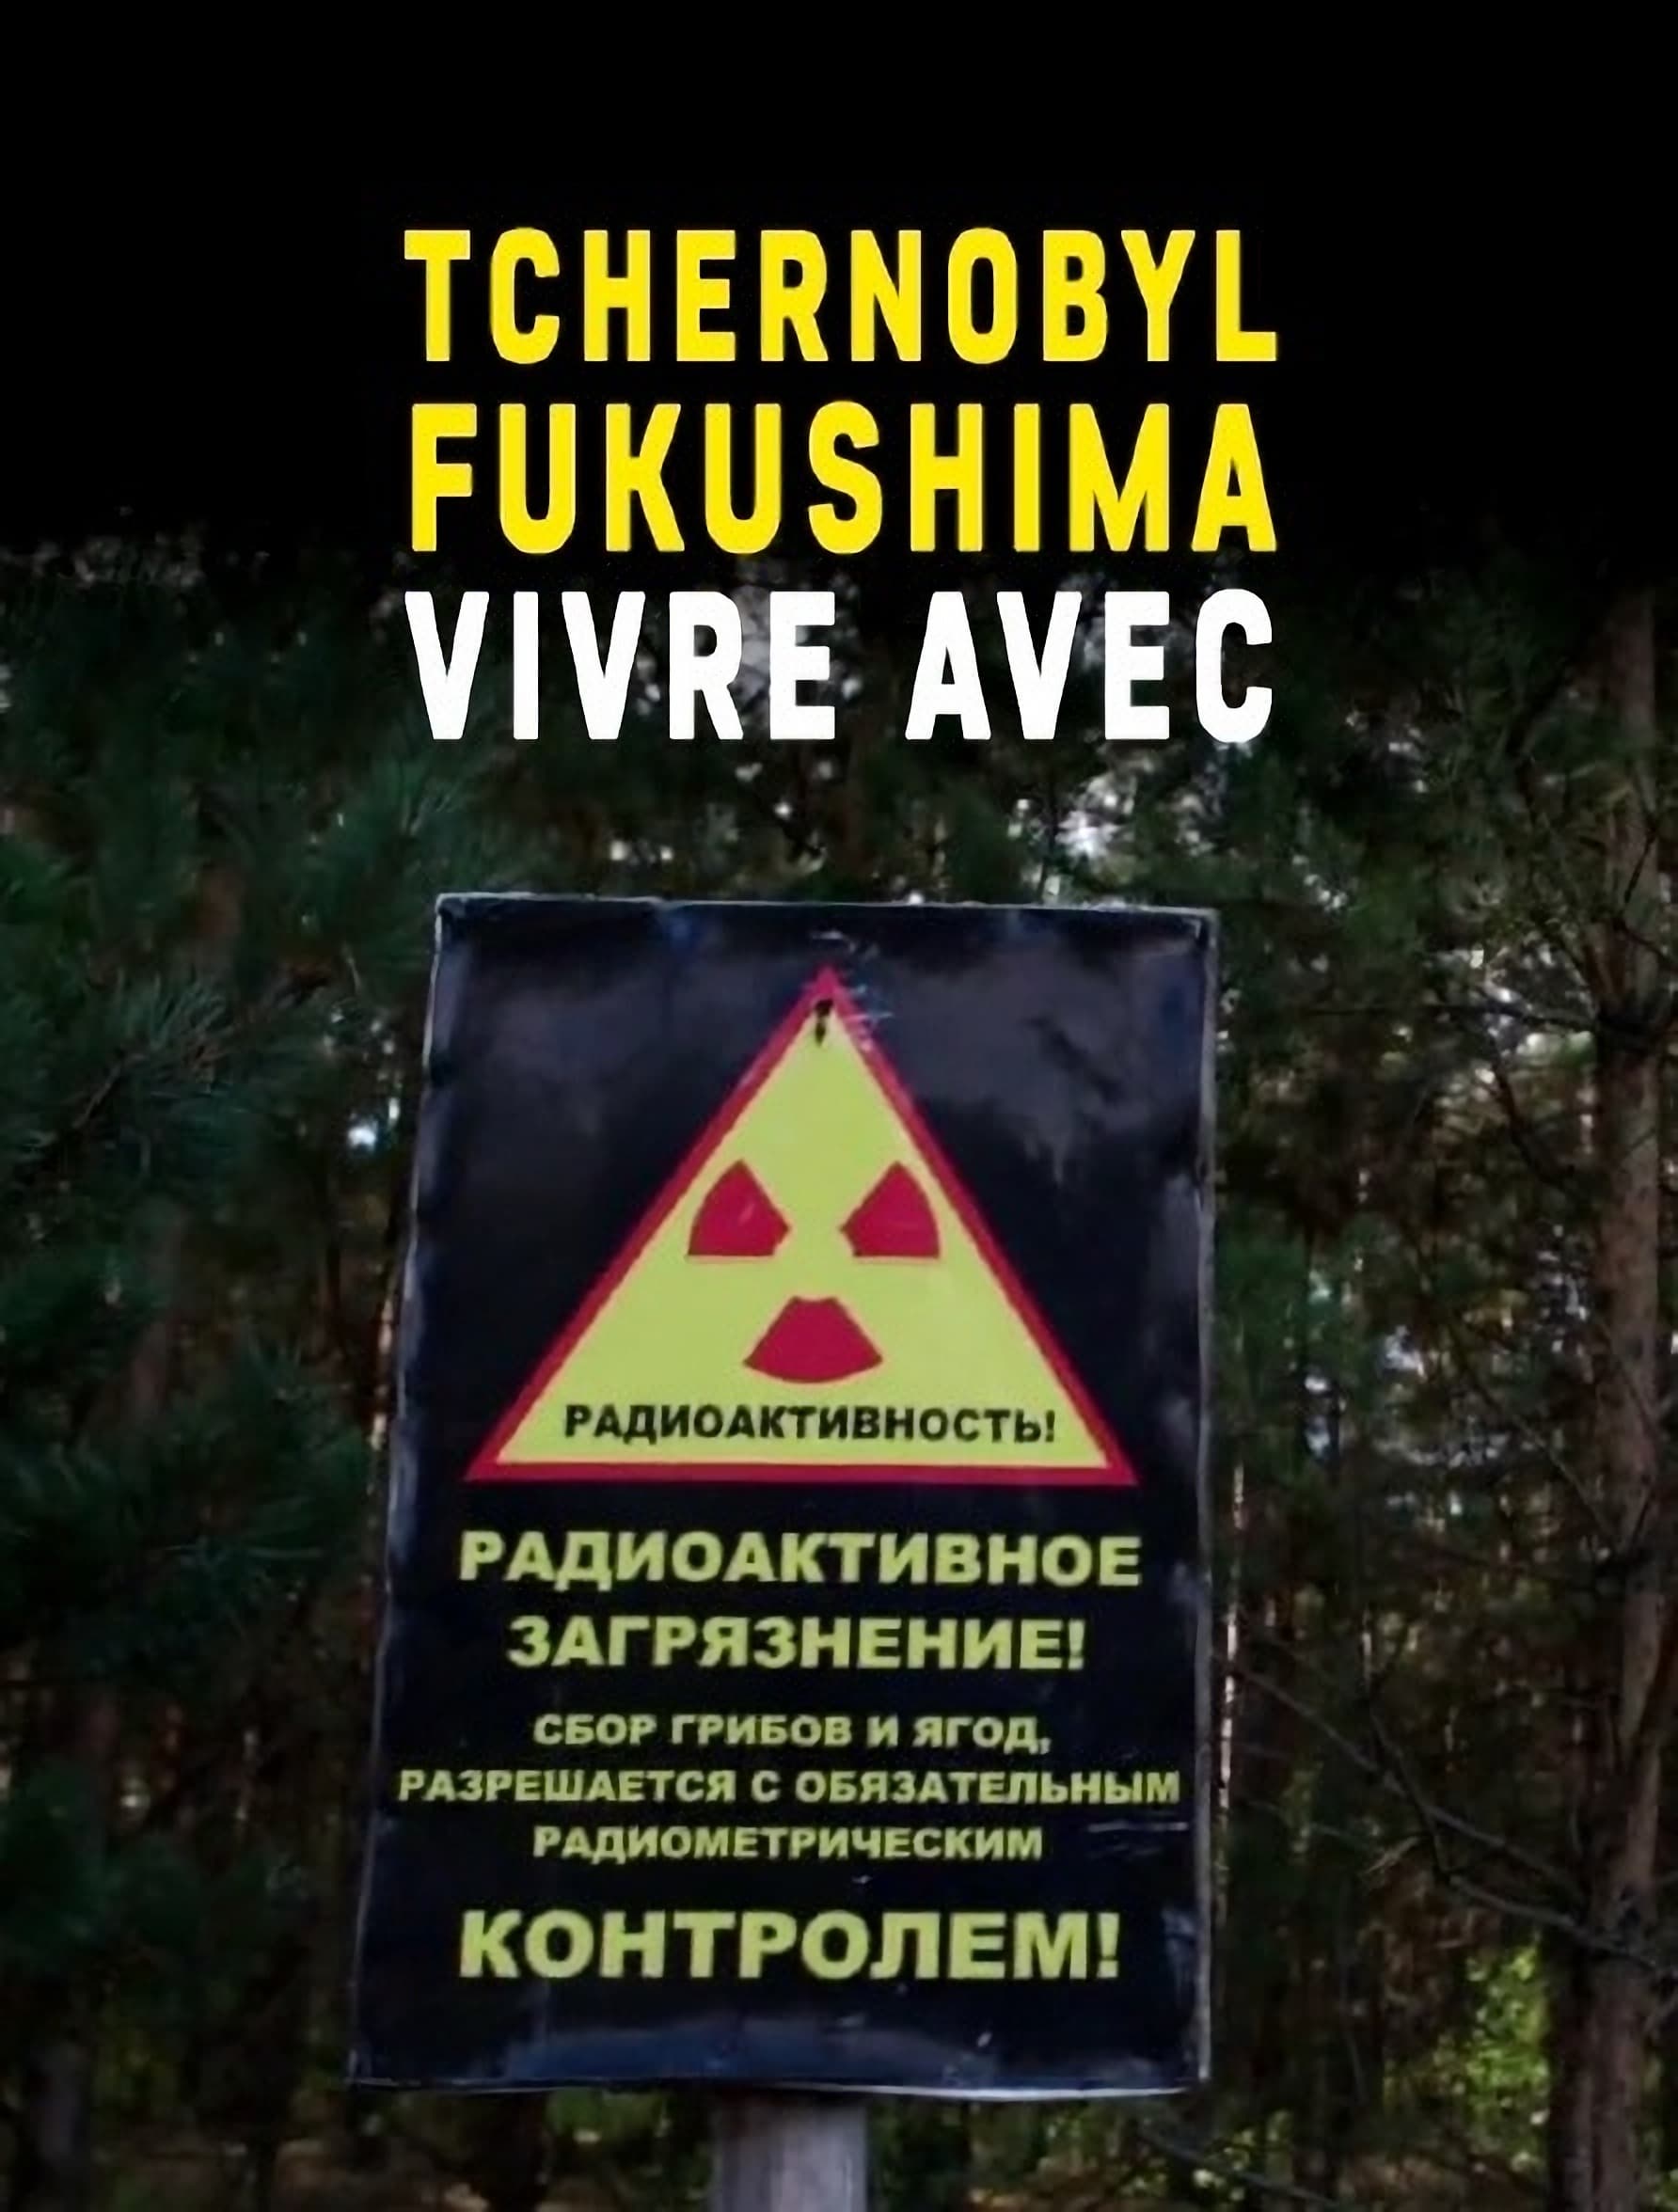 Chernobyl, Fukushima: Living with the Legacy